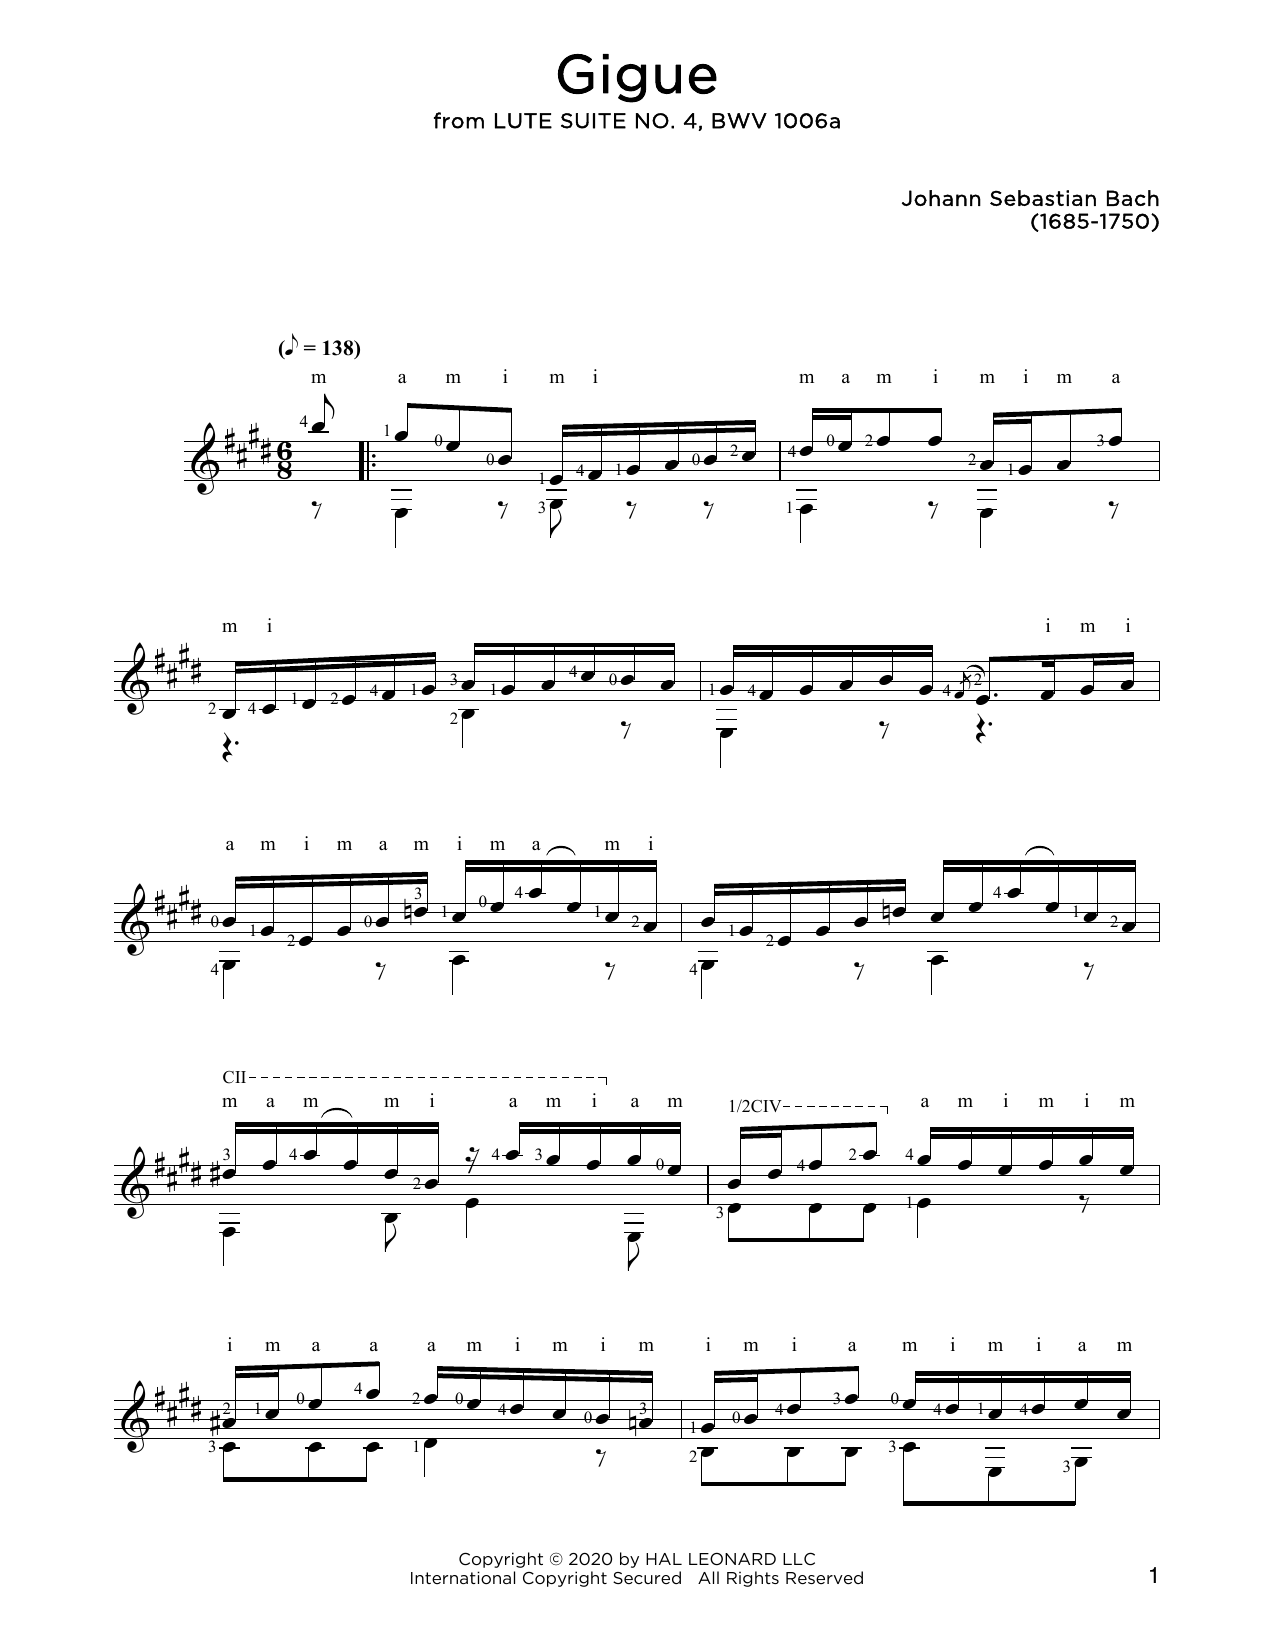 Johann Sebastian Bach Gigue sheet music notes and chords arranged for Solo Guitar